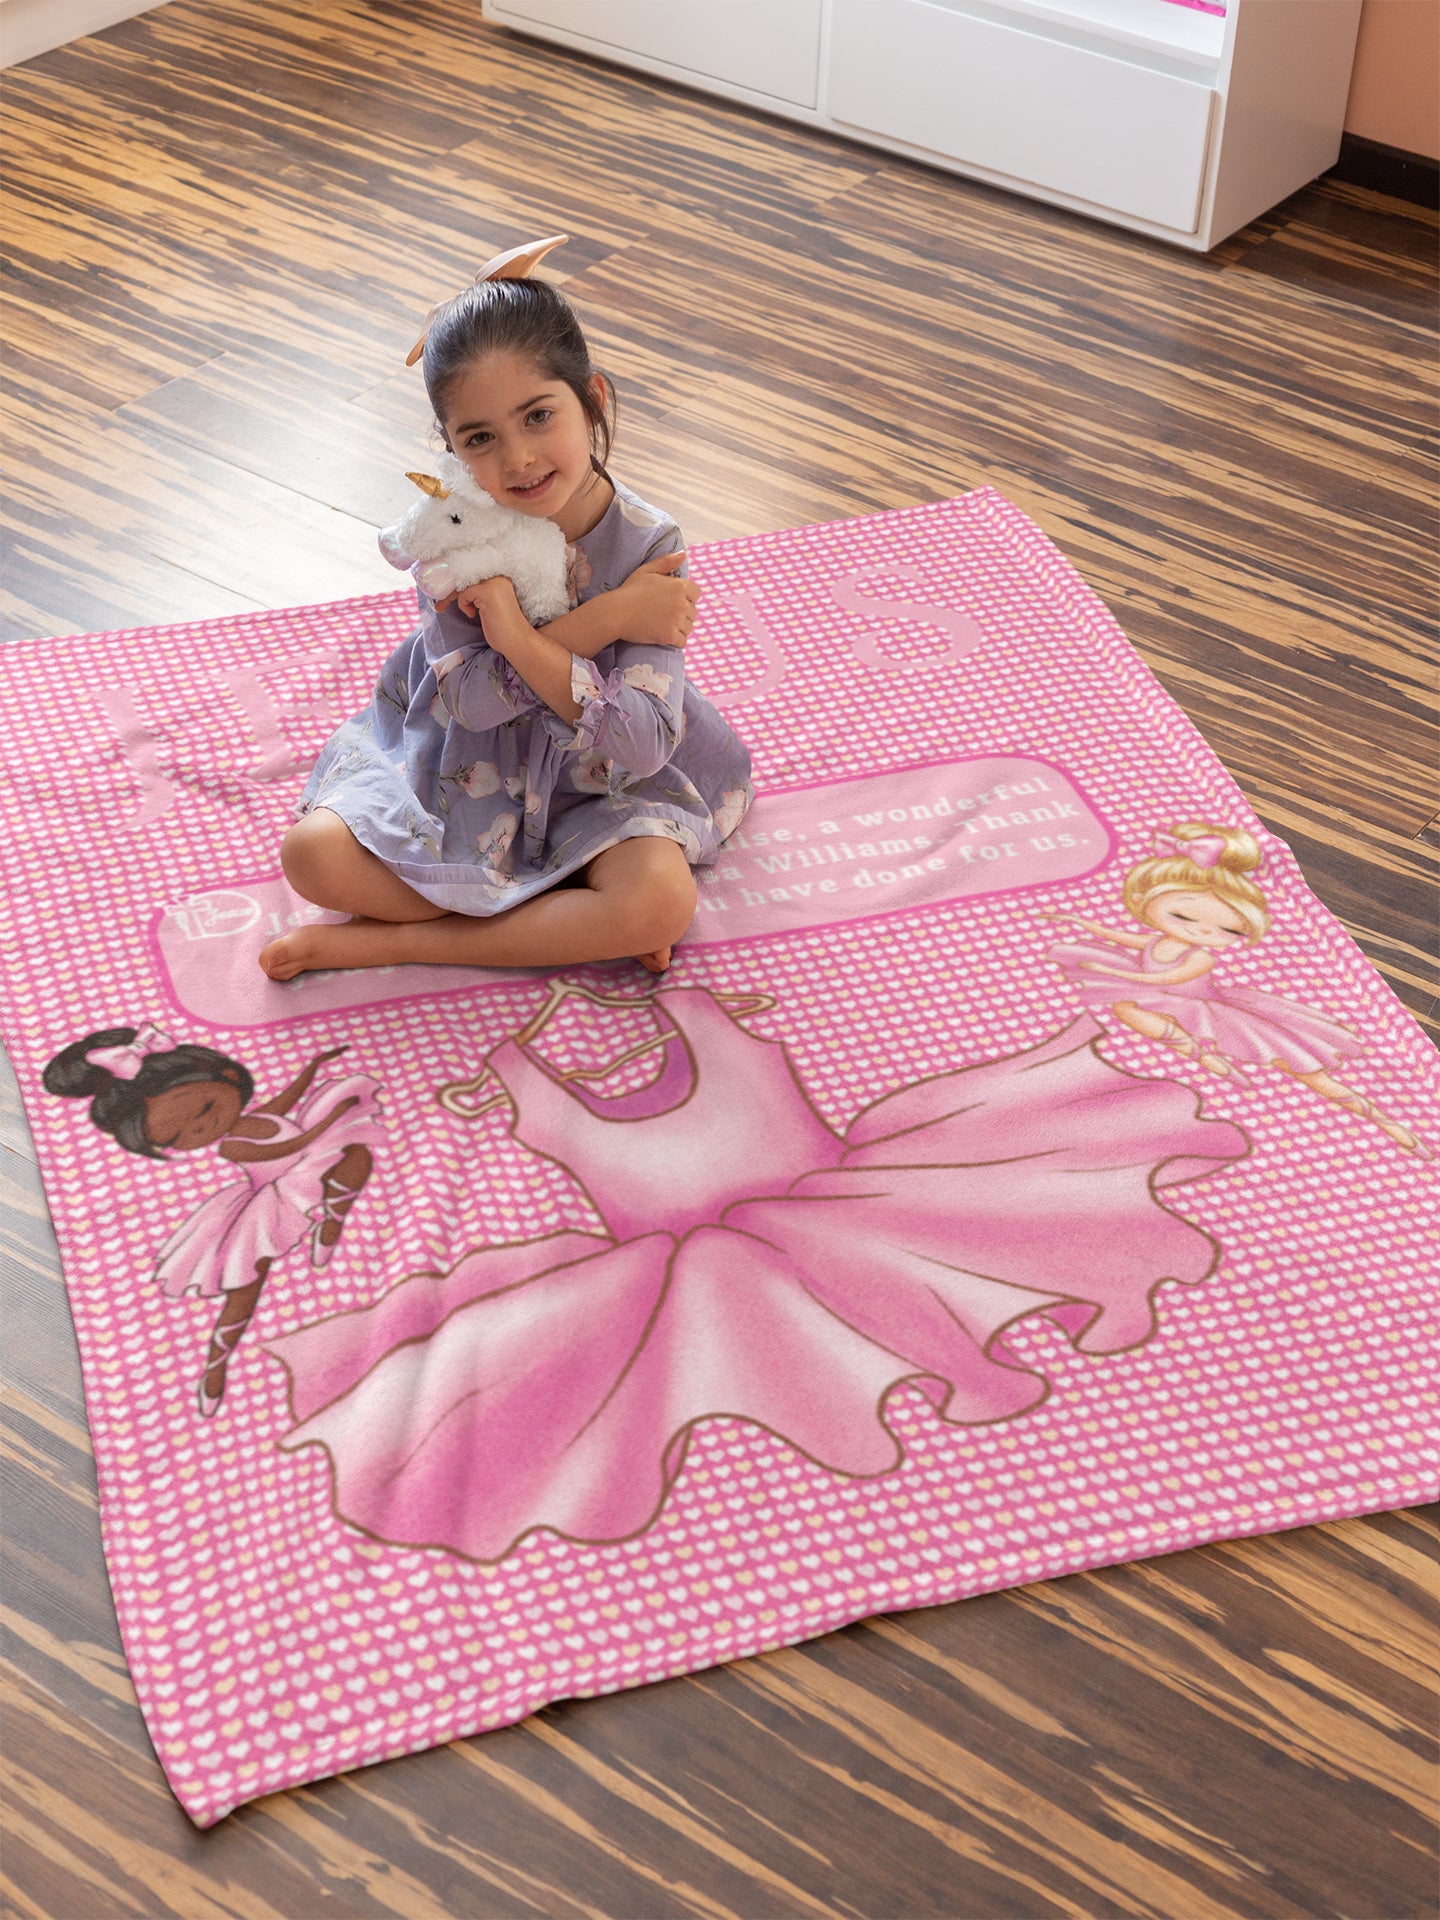 Blankets - Testimony Personalizable Mink Sherpa Blankets - Pink Ballerina - 50"x60"